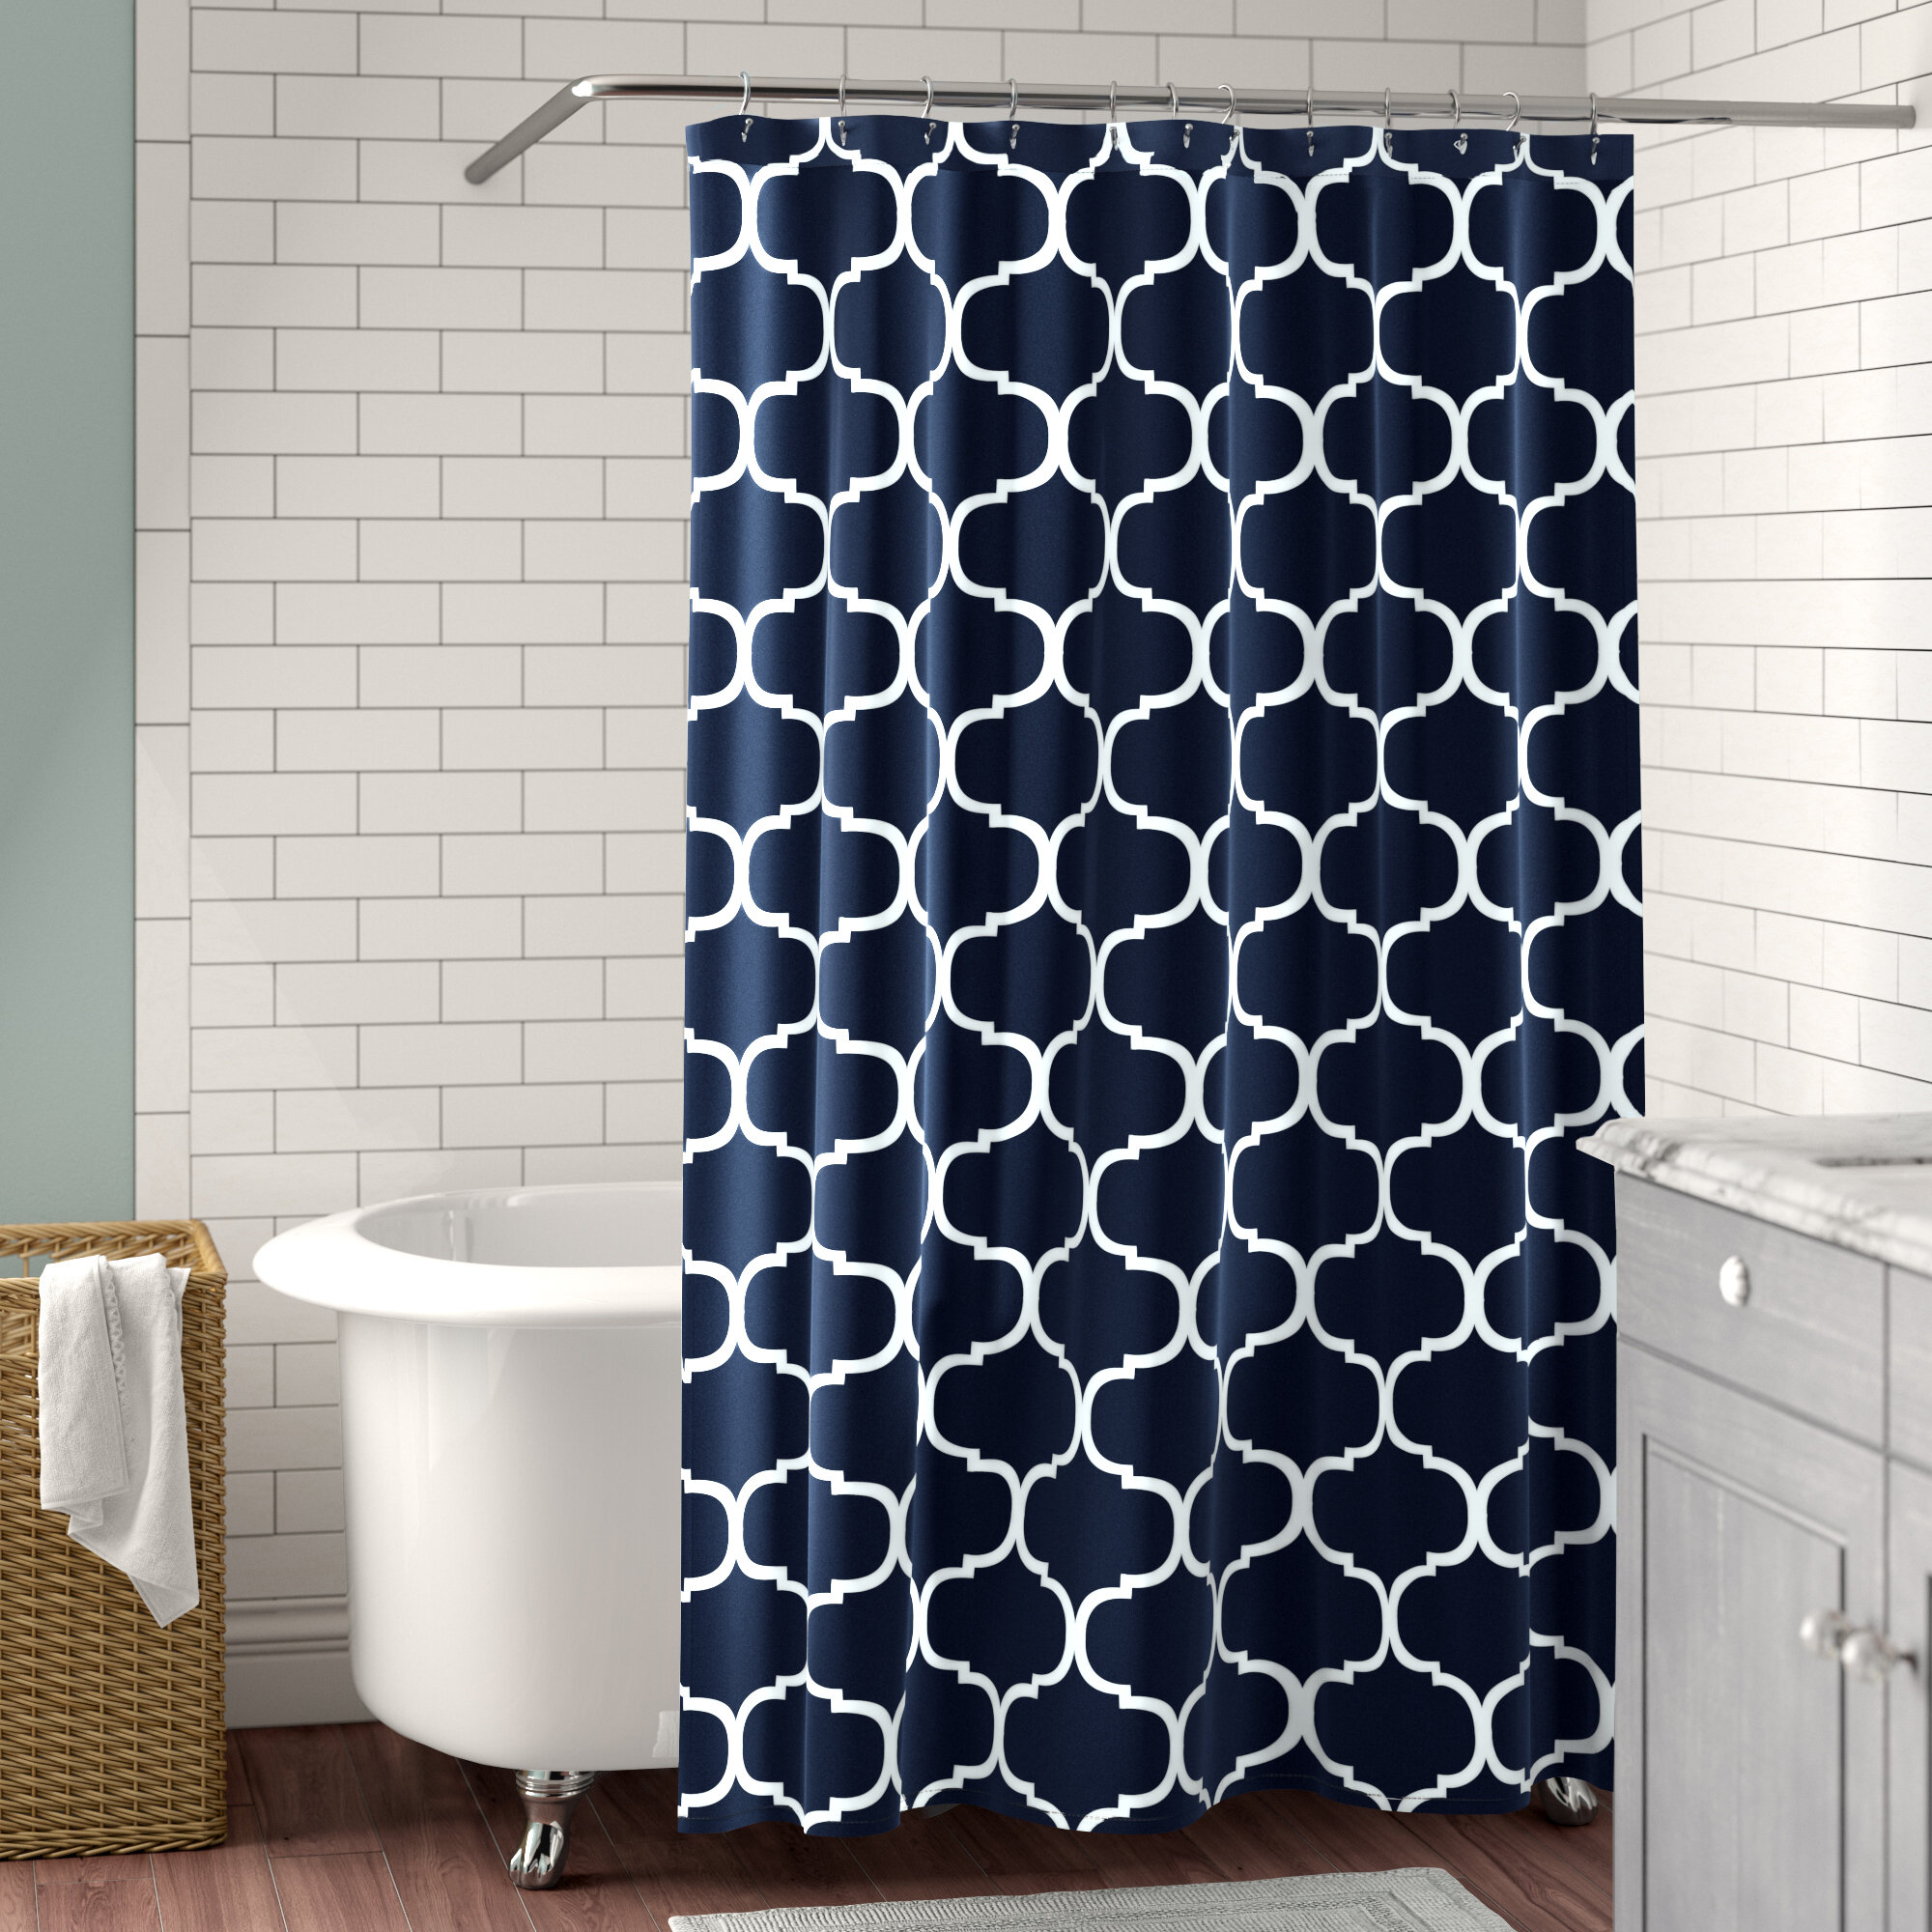 Details about   Elegant Geometric Shower Curtains Herringbone Waterproof Fabric Polyester Bathro 